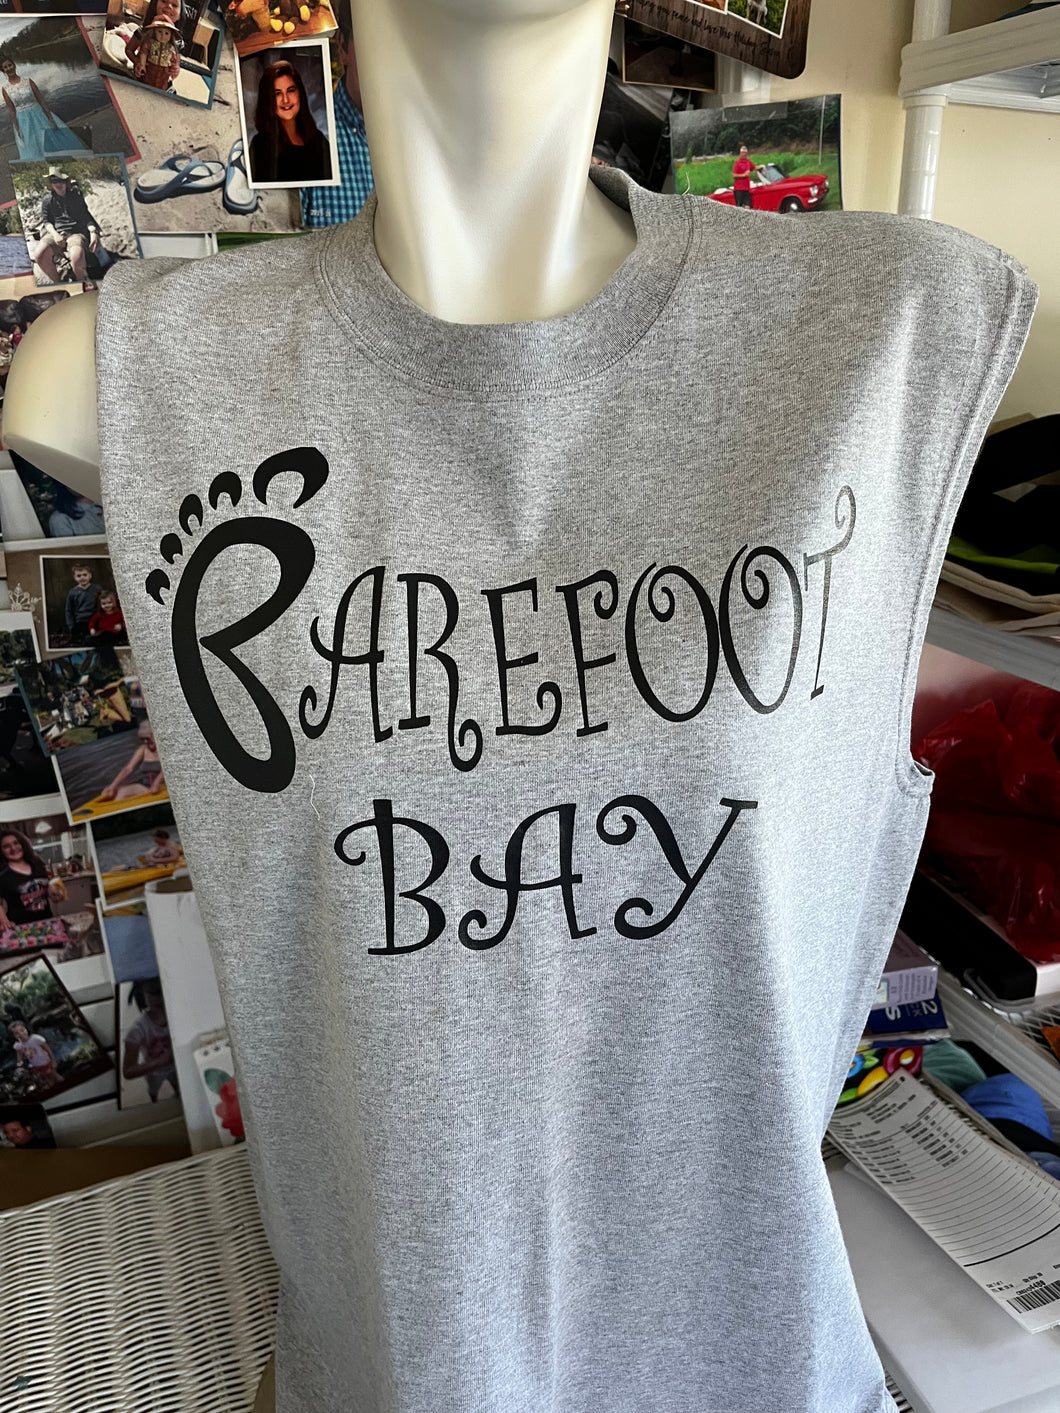 Barefoot Bay Tank tee shirt size medium mens cut